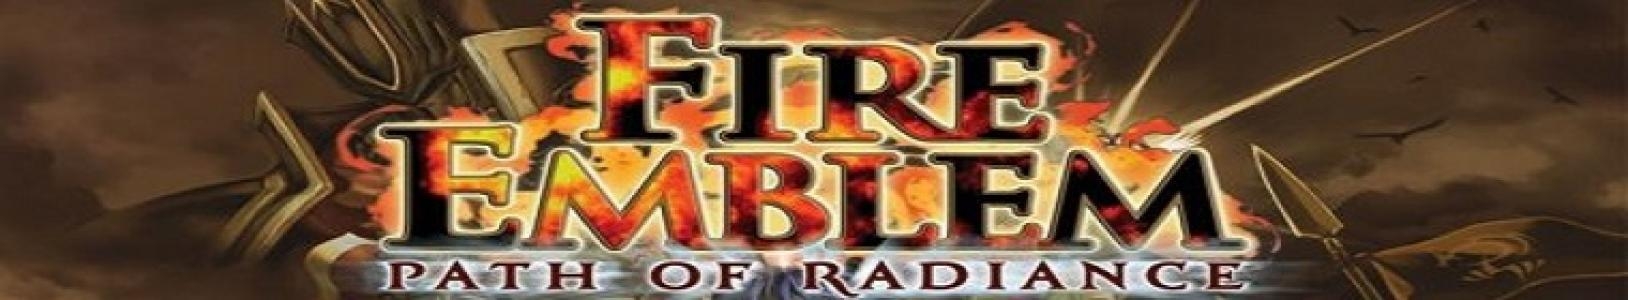 Fire Emblem: Path of Radiance banner